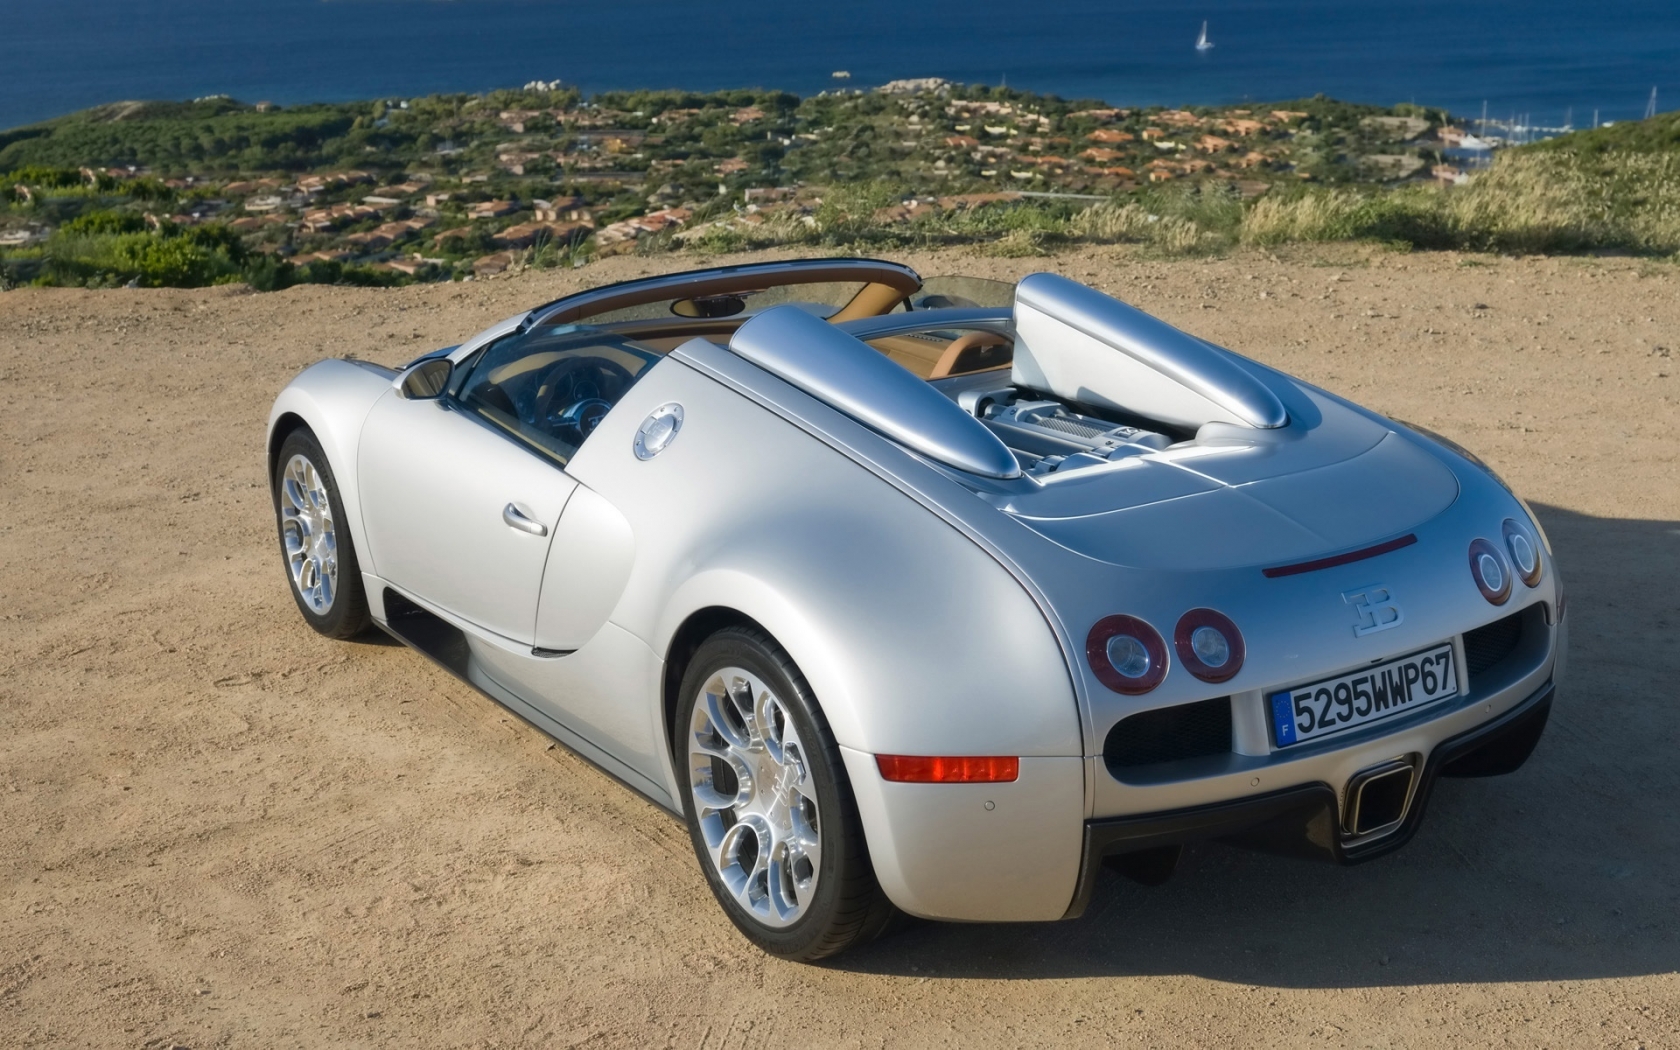 Bugatti Veyron 16.4 Grand Sport in Sardinia 2010 - Rear Angle for 1680 x 1050 widescreen resolution